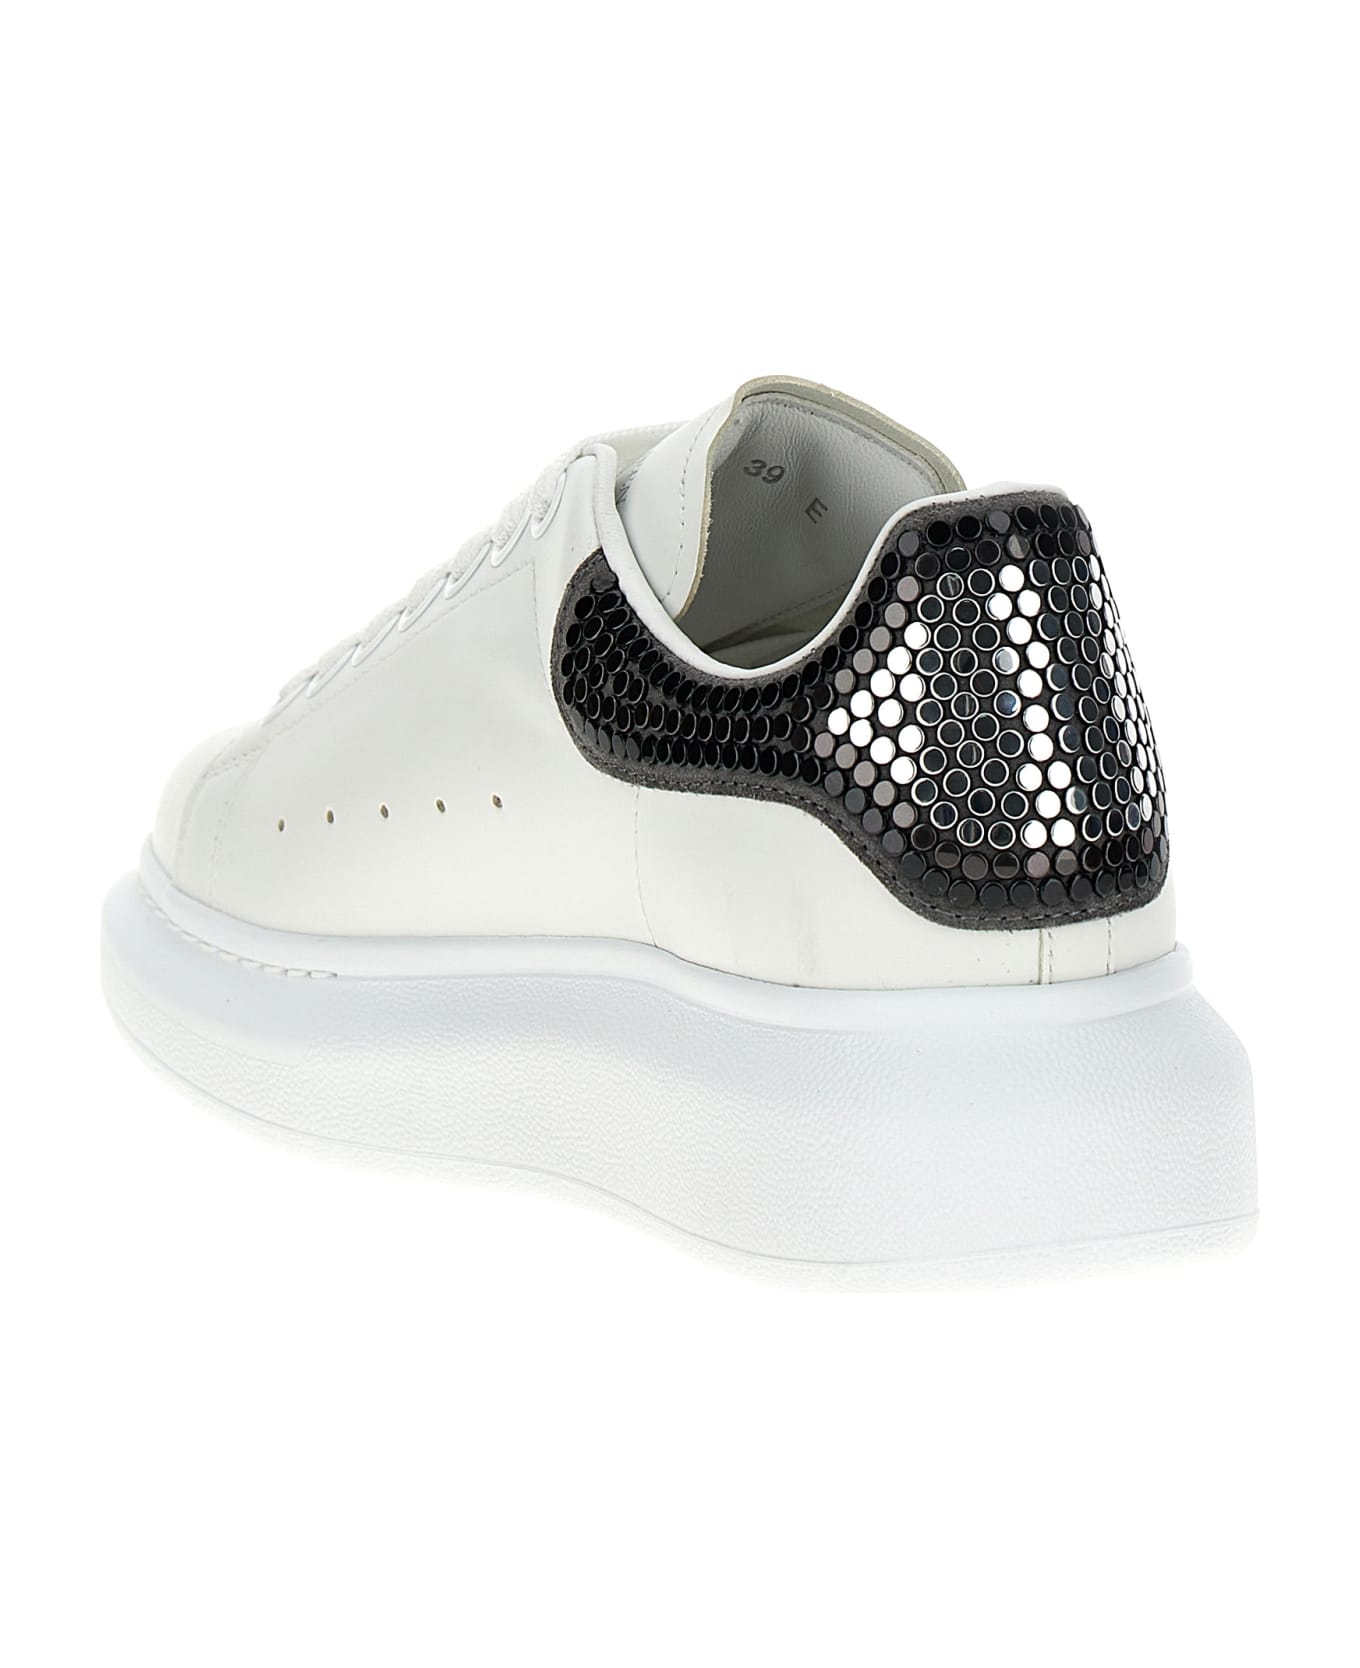 Alexander McQueen Larry Sneakers - White/Black